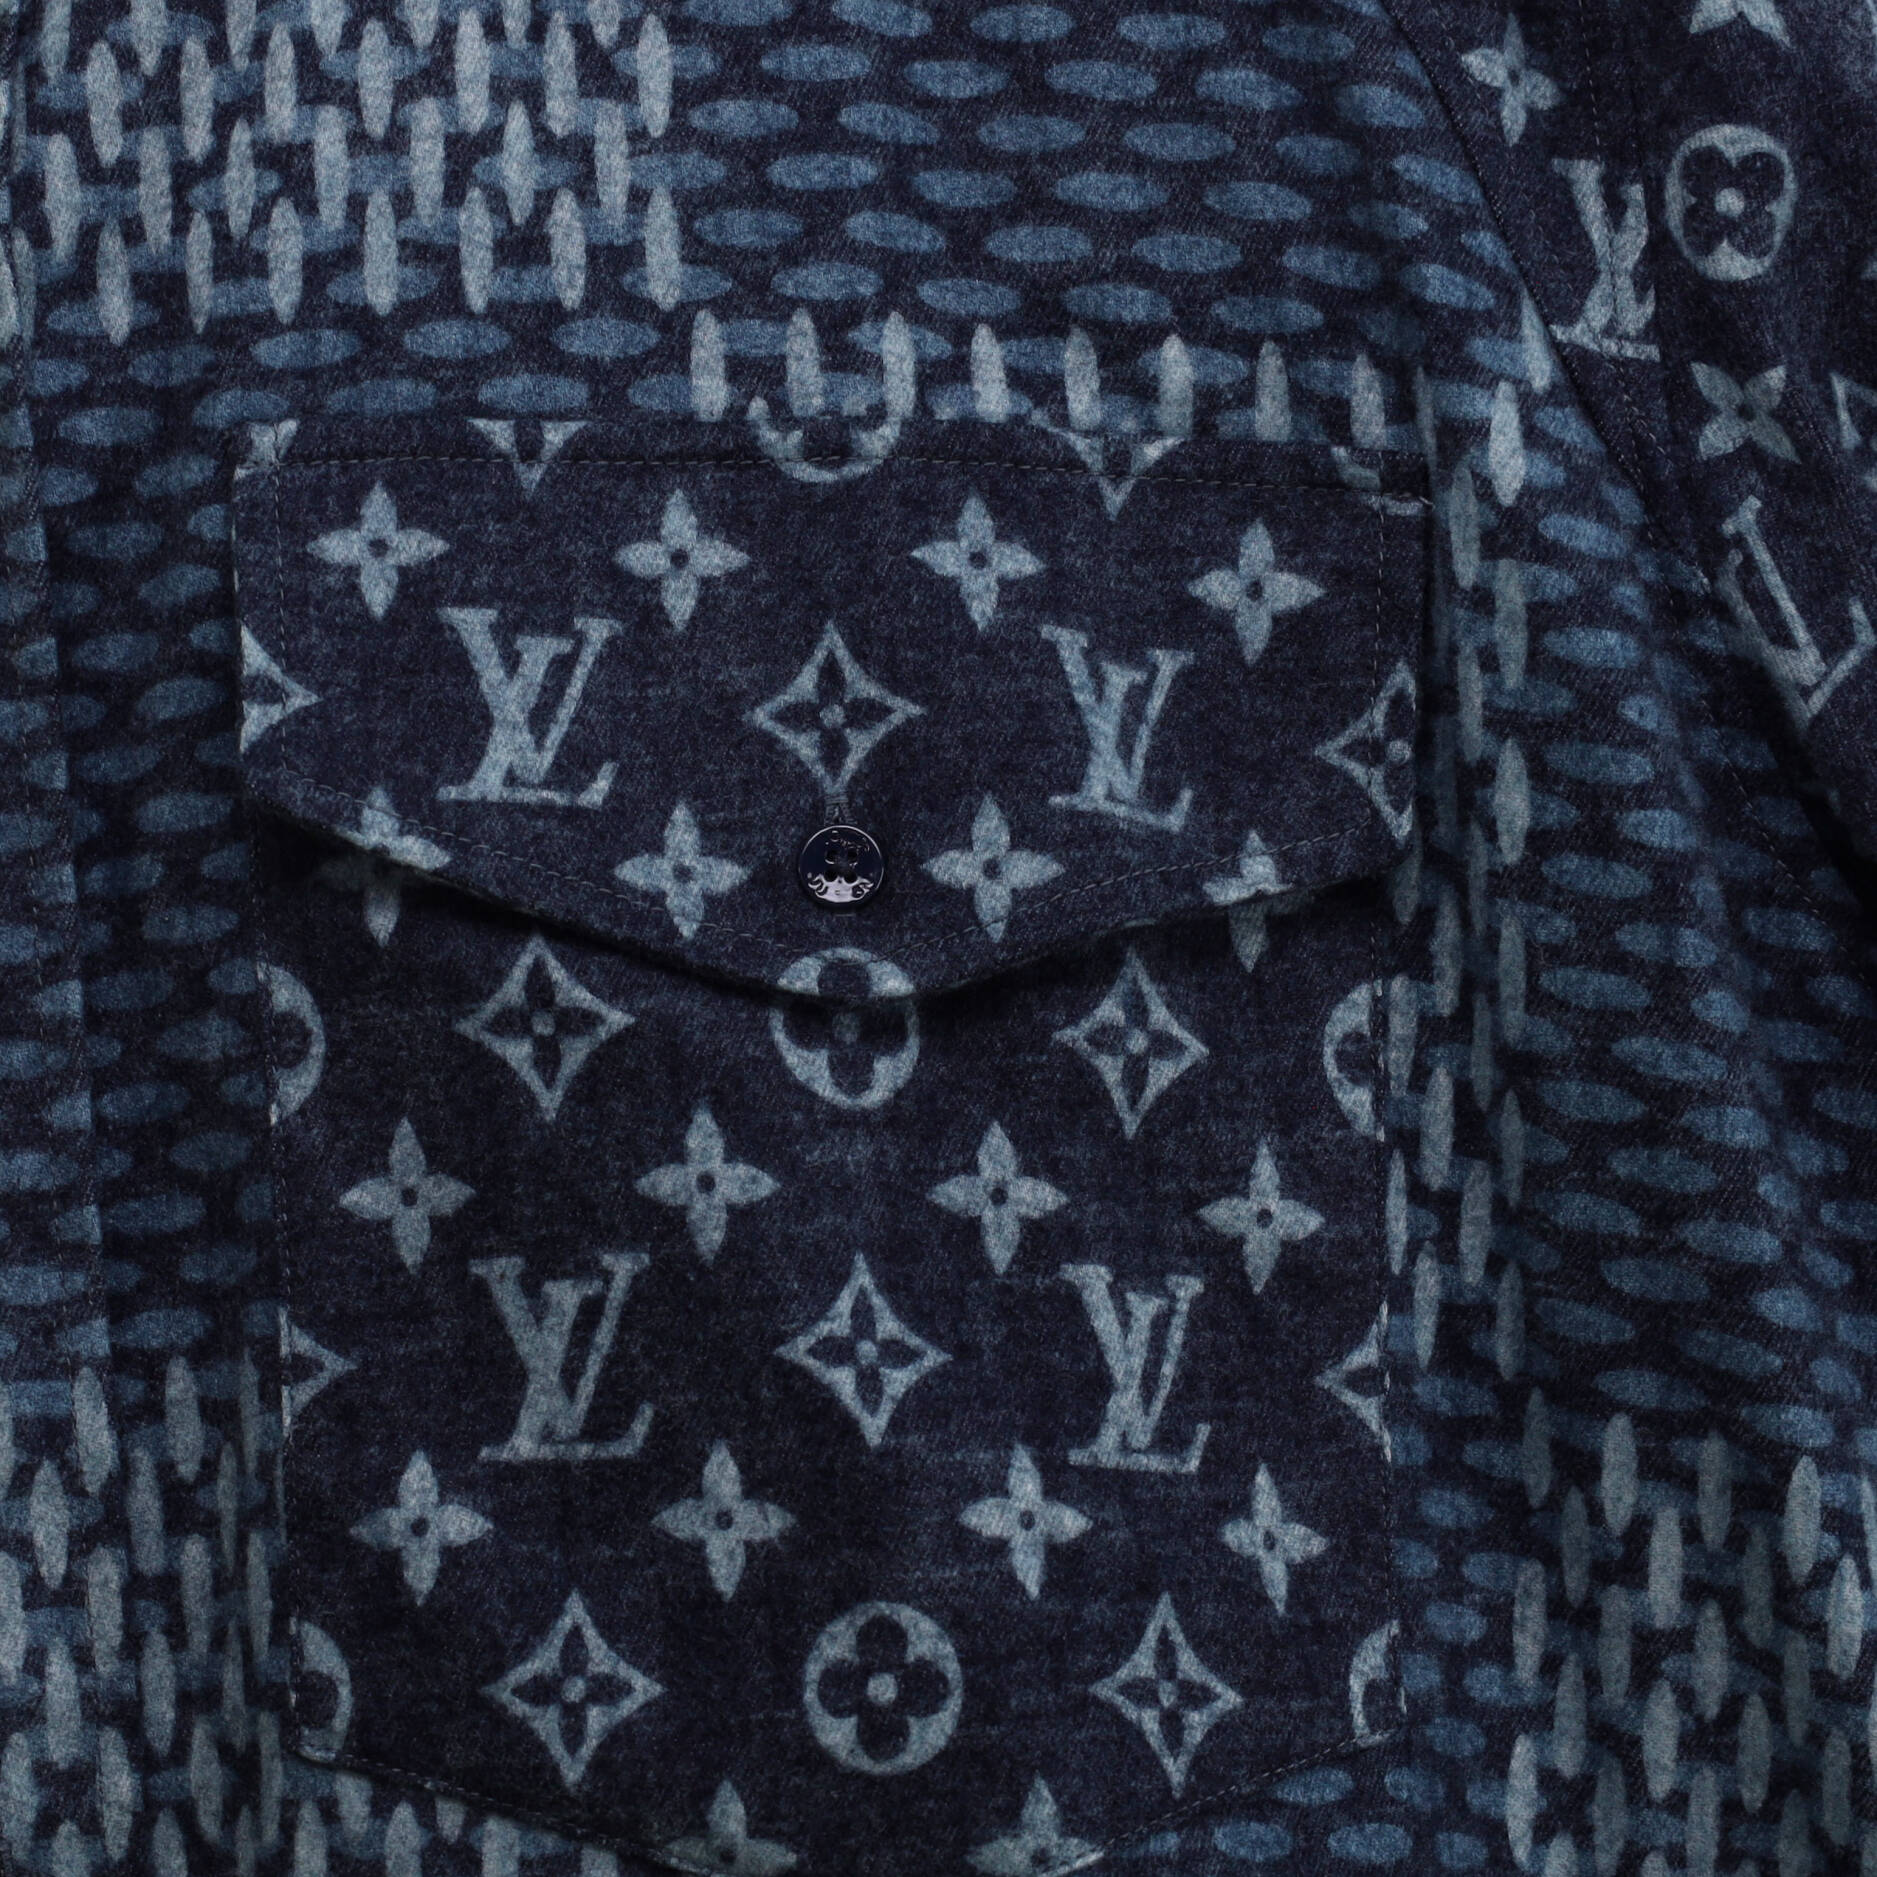 Louis Vuitton Men's M LV Nigo Zip Jacket